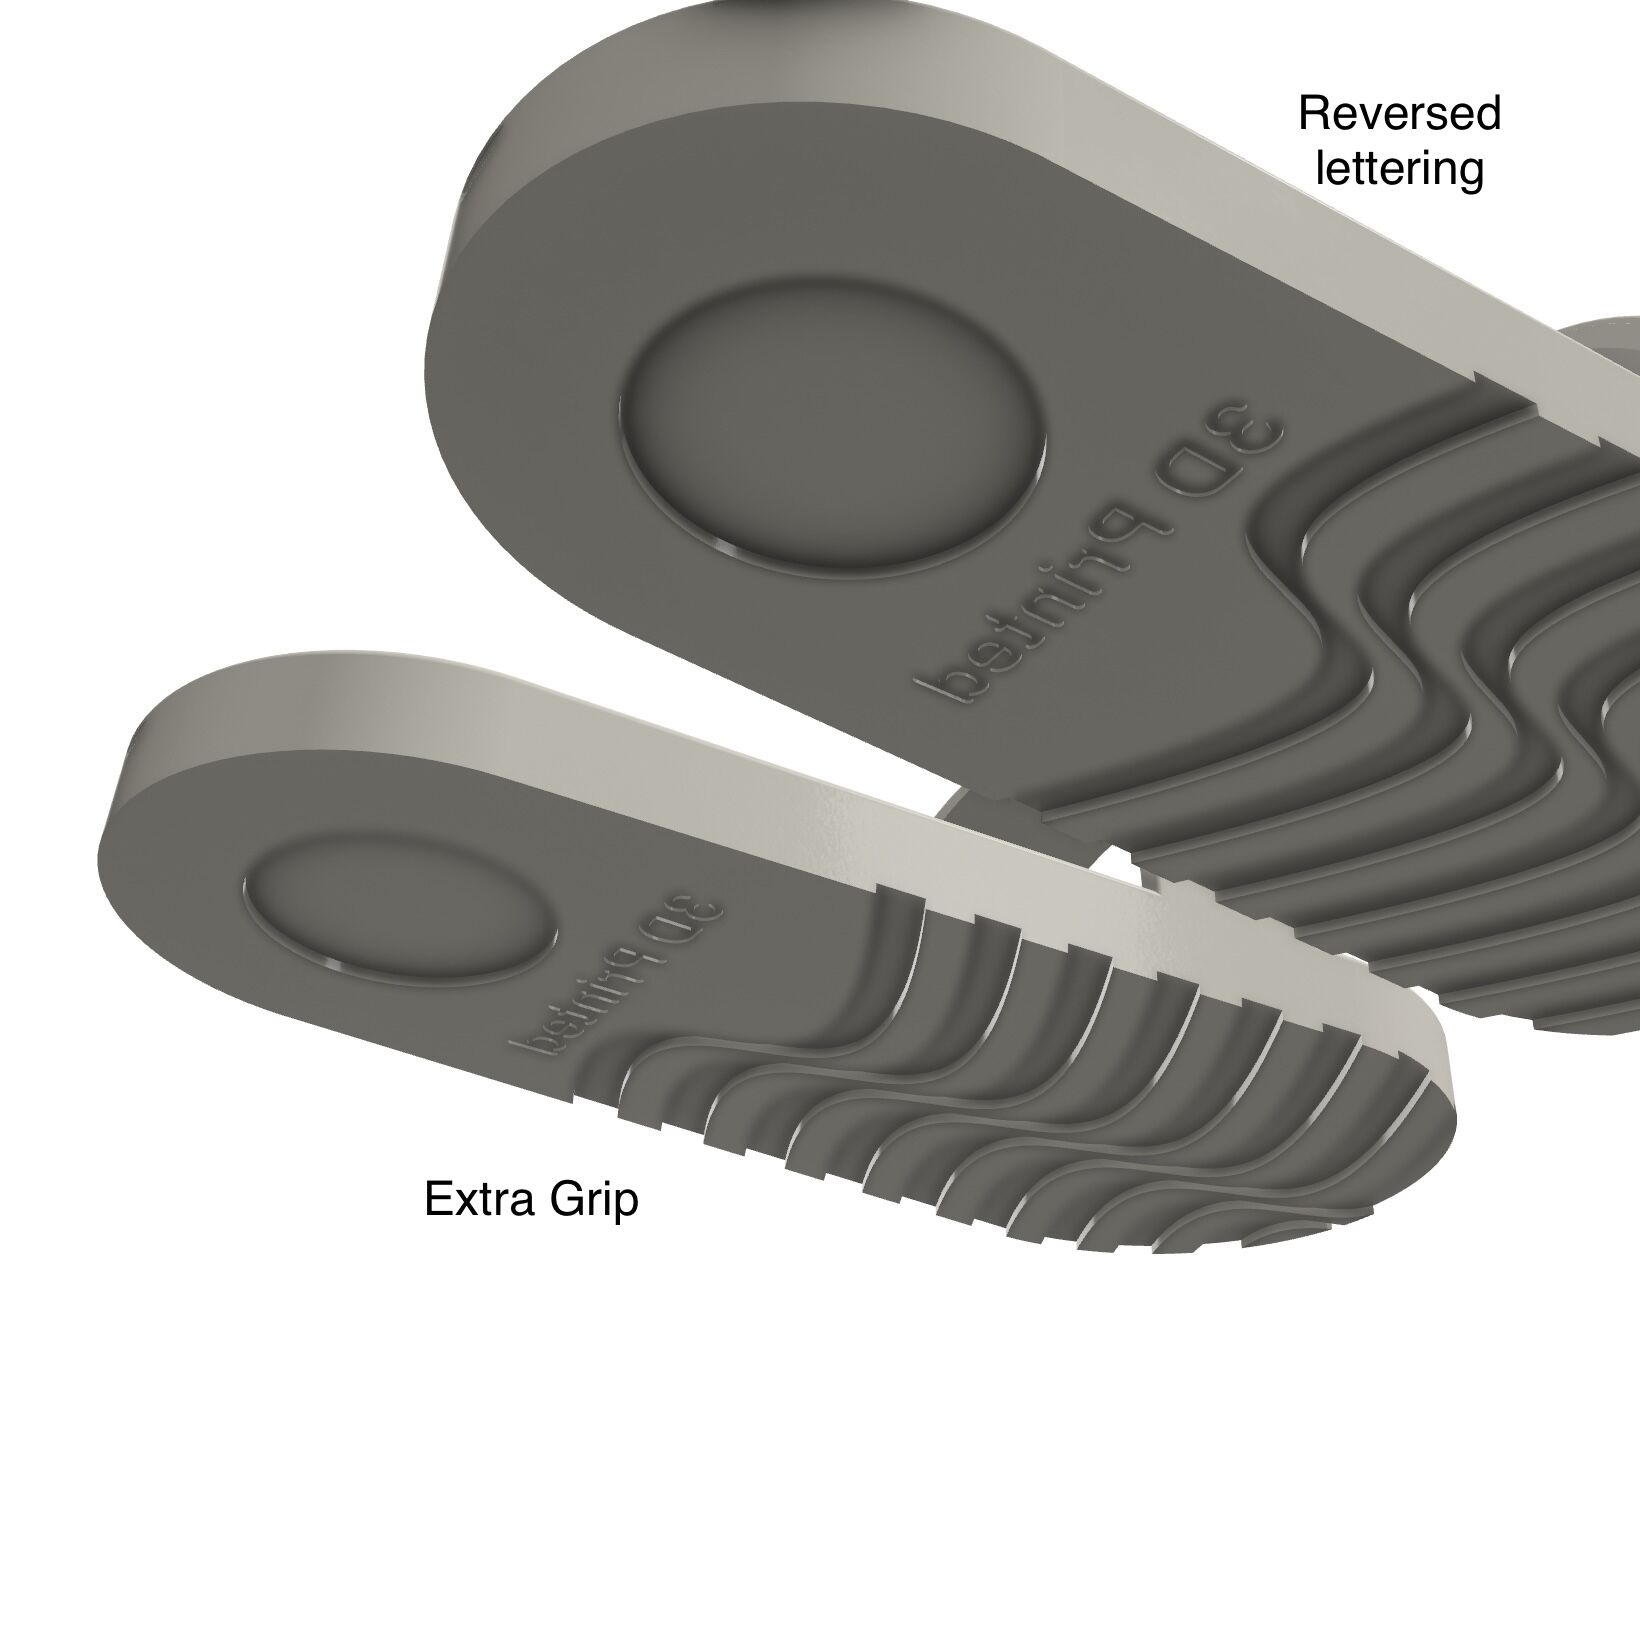 Wide Slipper with ergonomic design